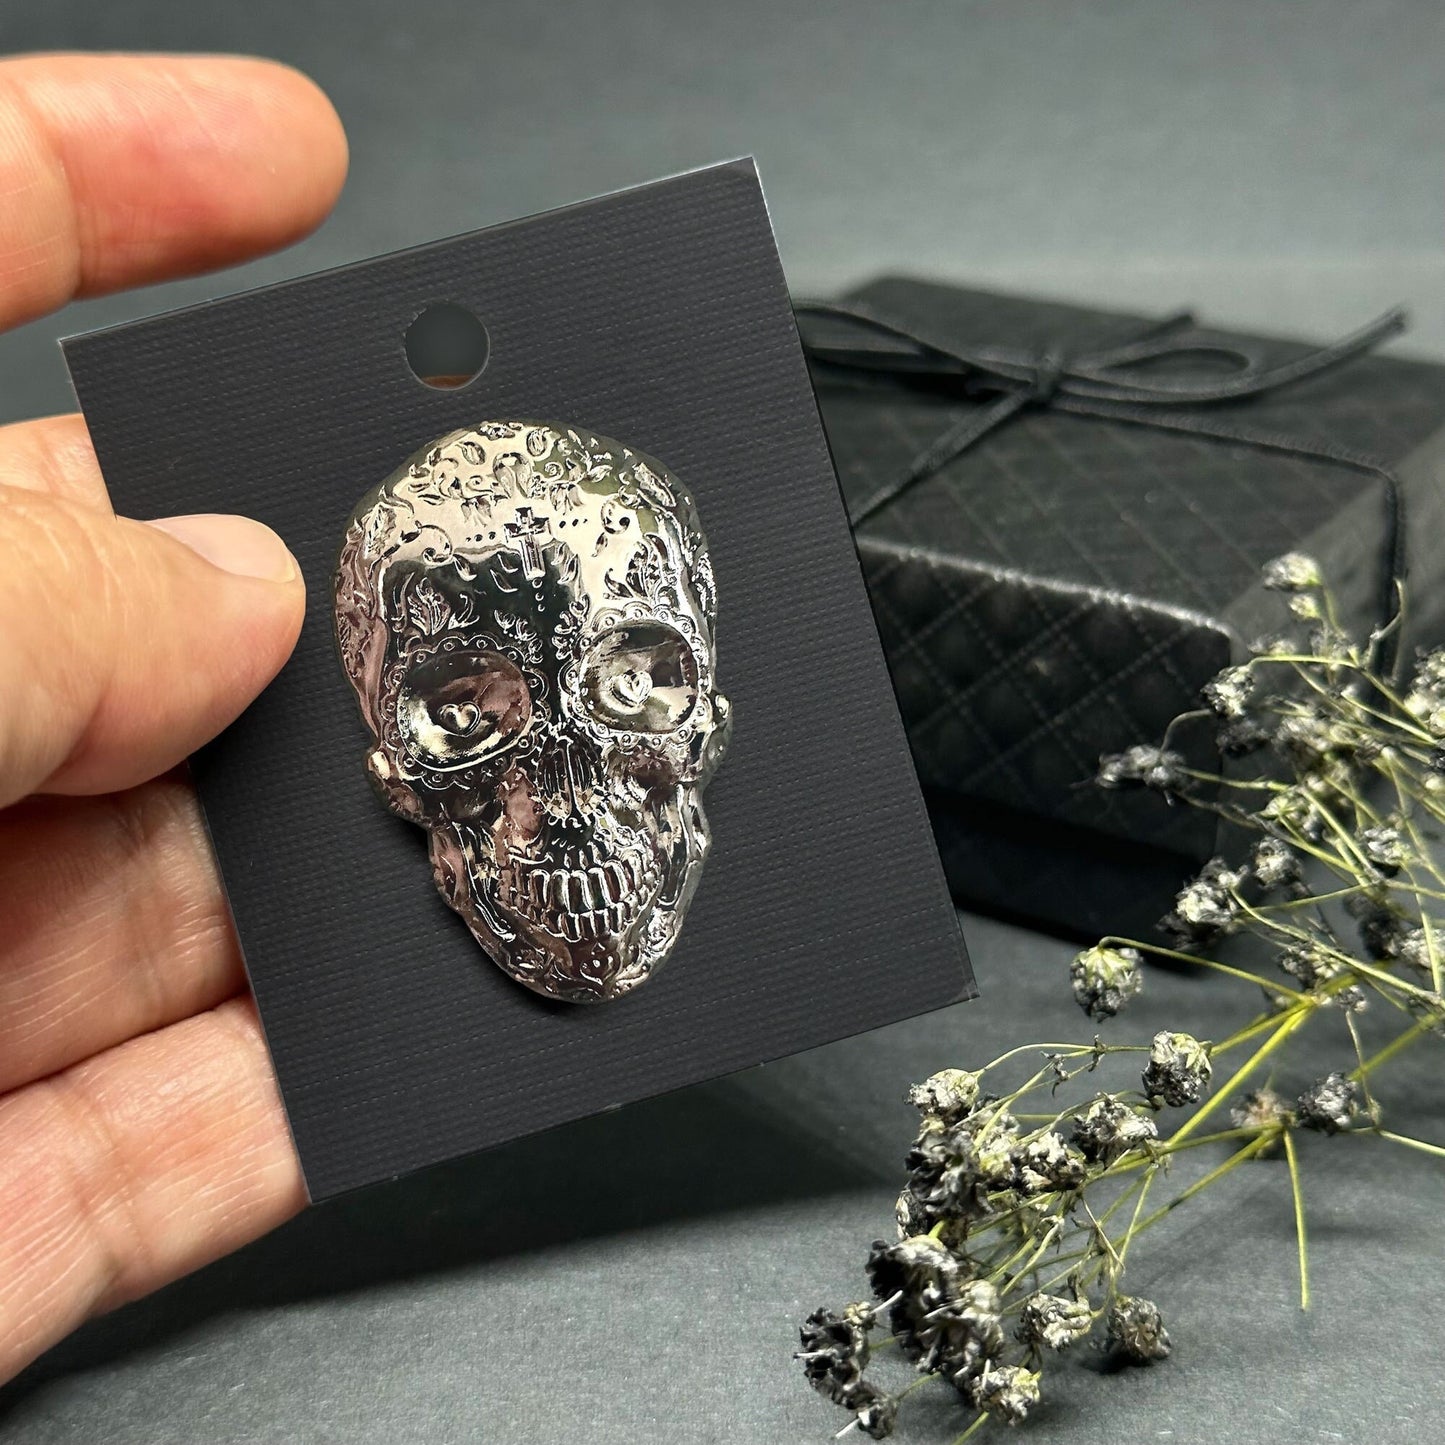 Mexican Sugar Skull Pin Brooch Silver Chrome Artfully Carved Design Pin Back Button Unisex Fashion Day of the Dead Jewelry Calavera Broche